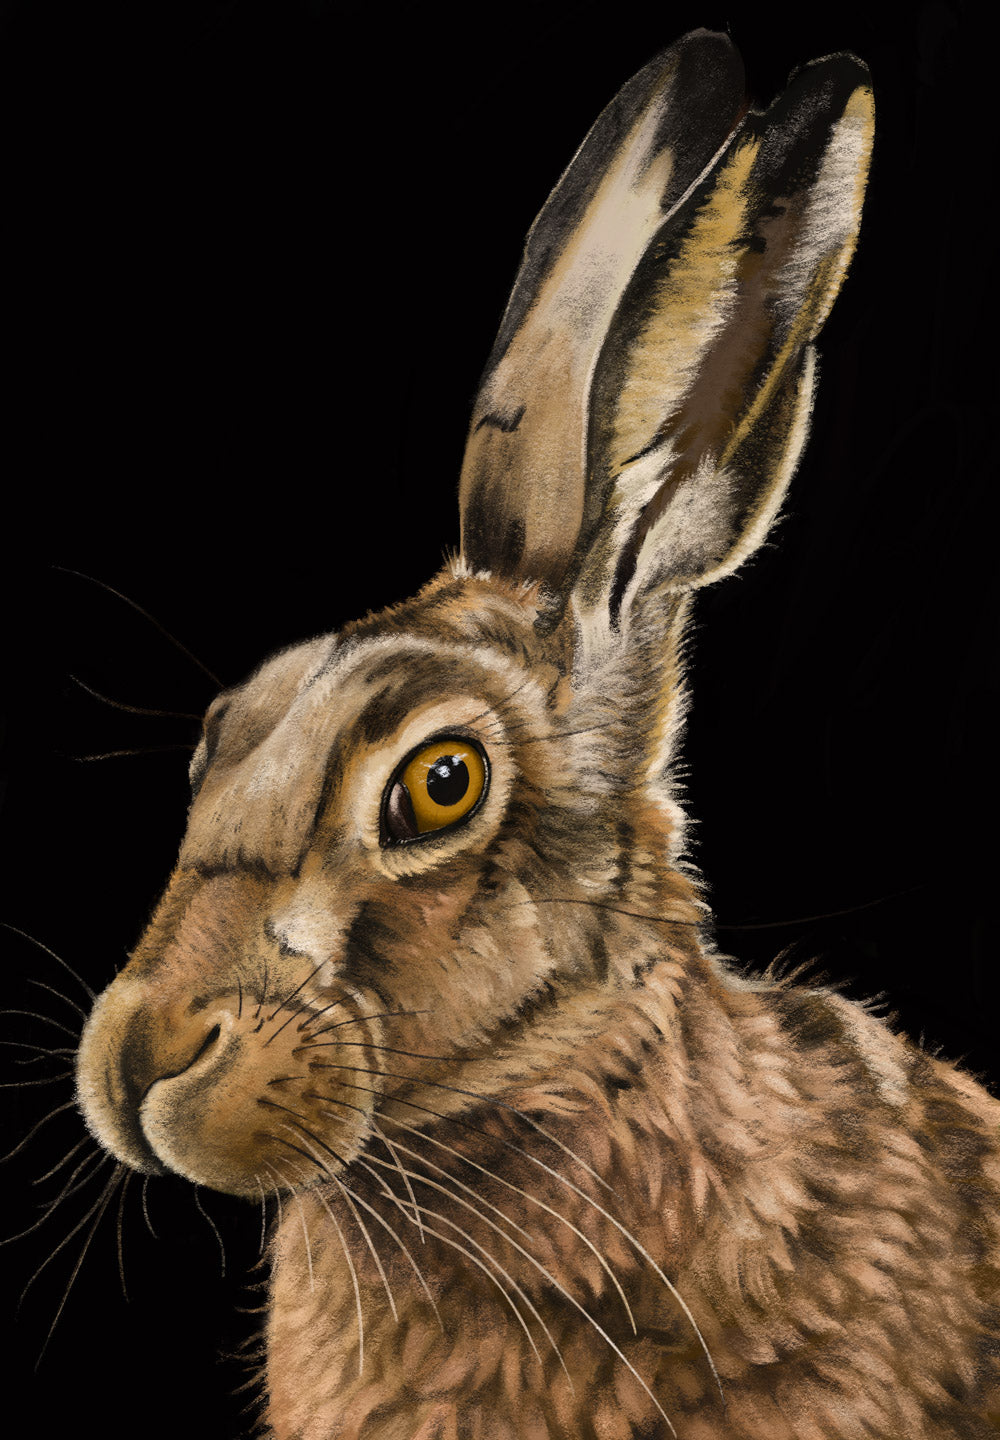 Will_J_Bailey_Rabbit_Painting.jpg